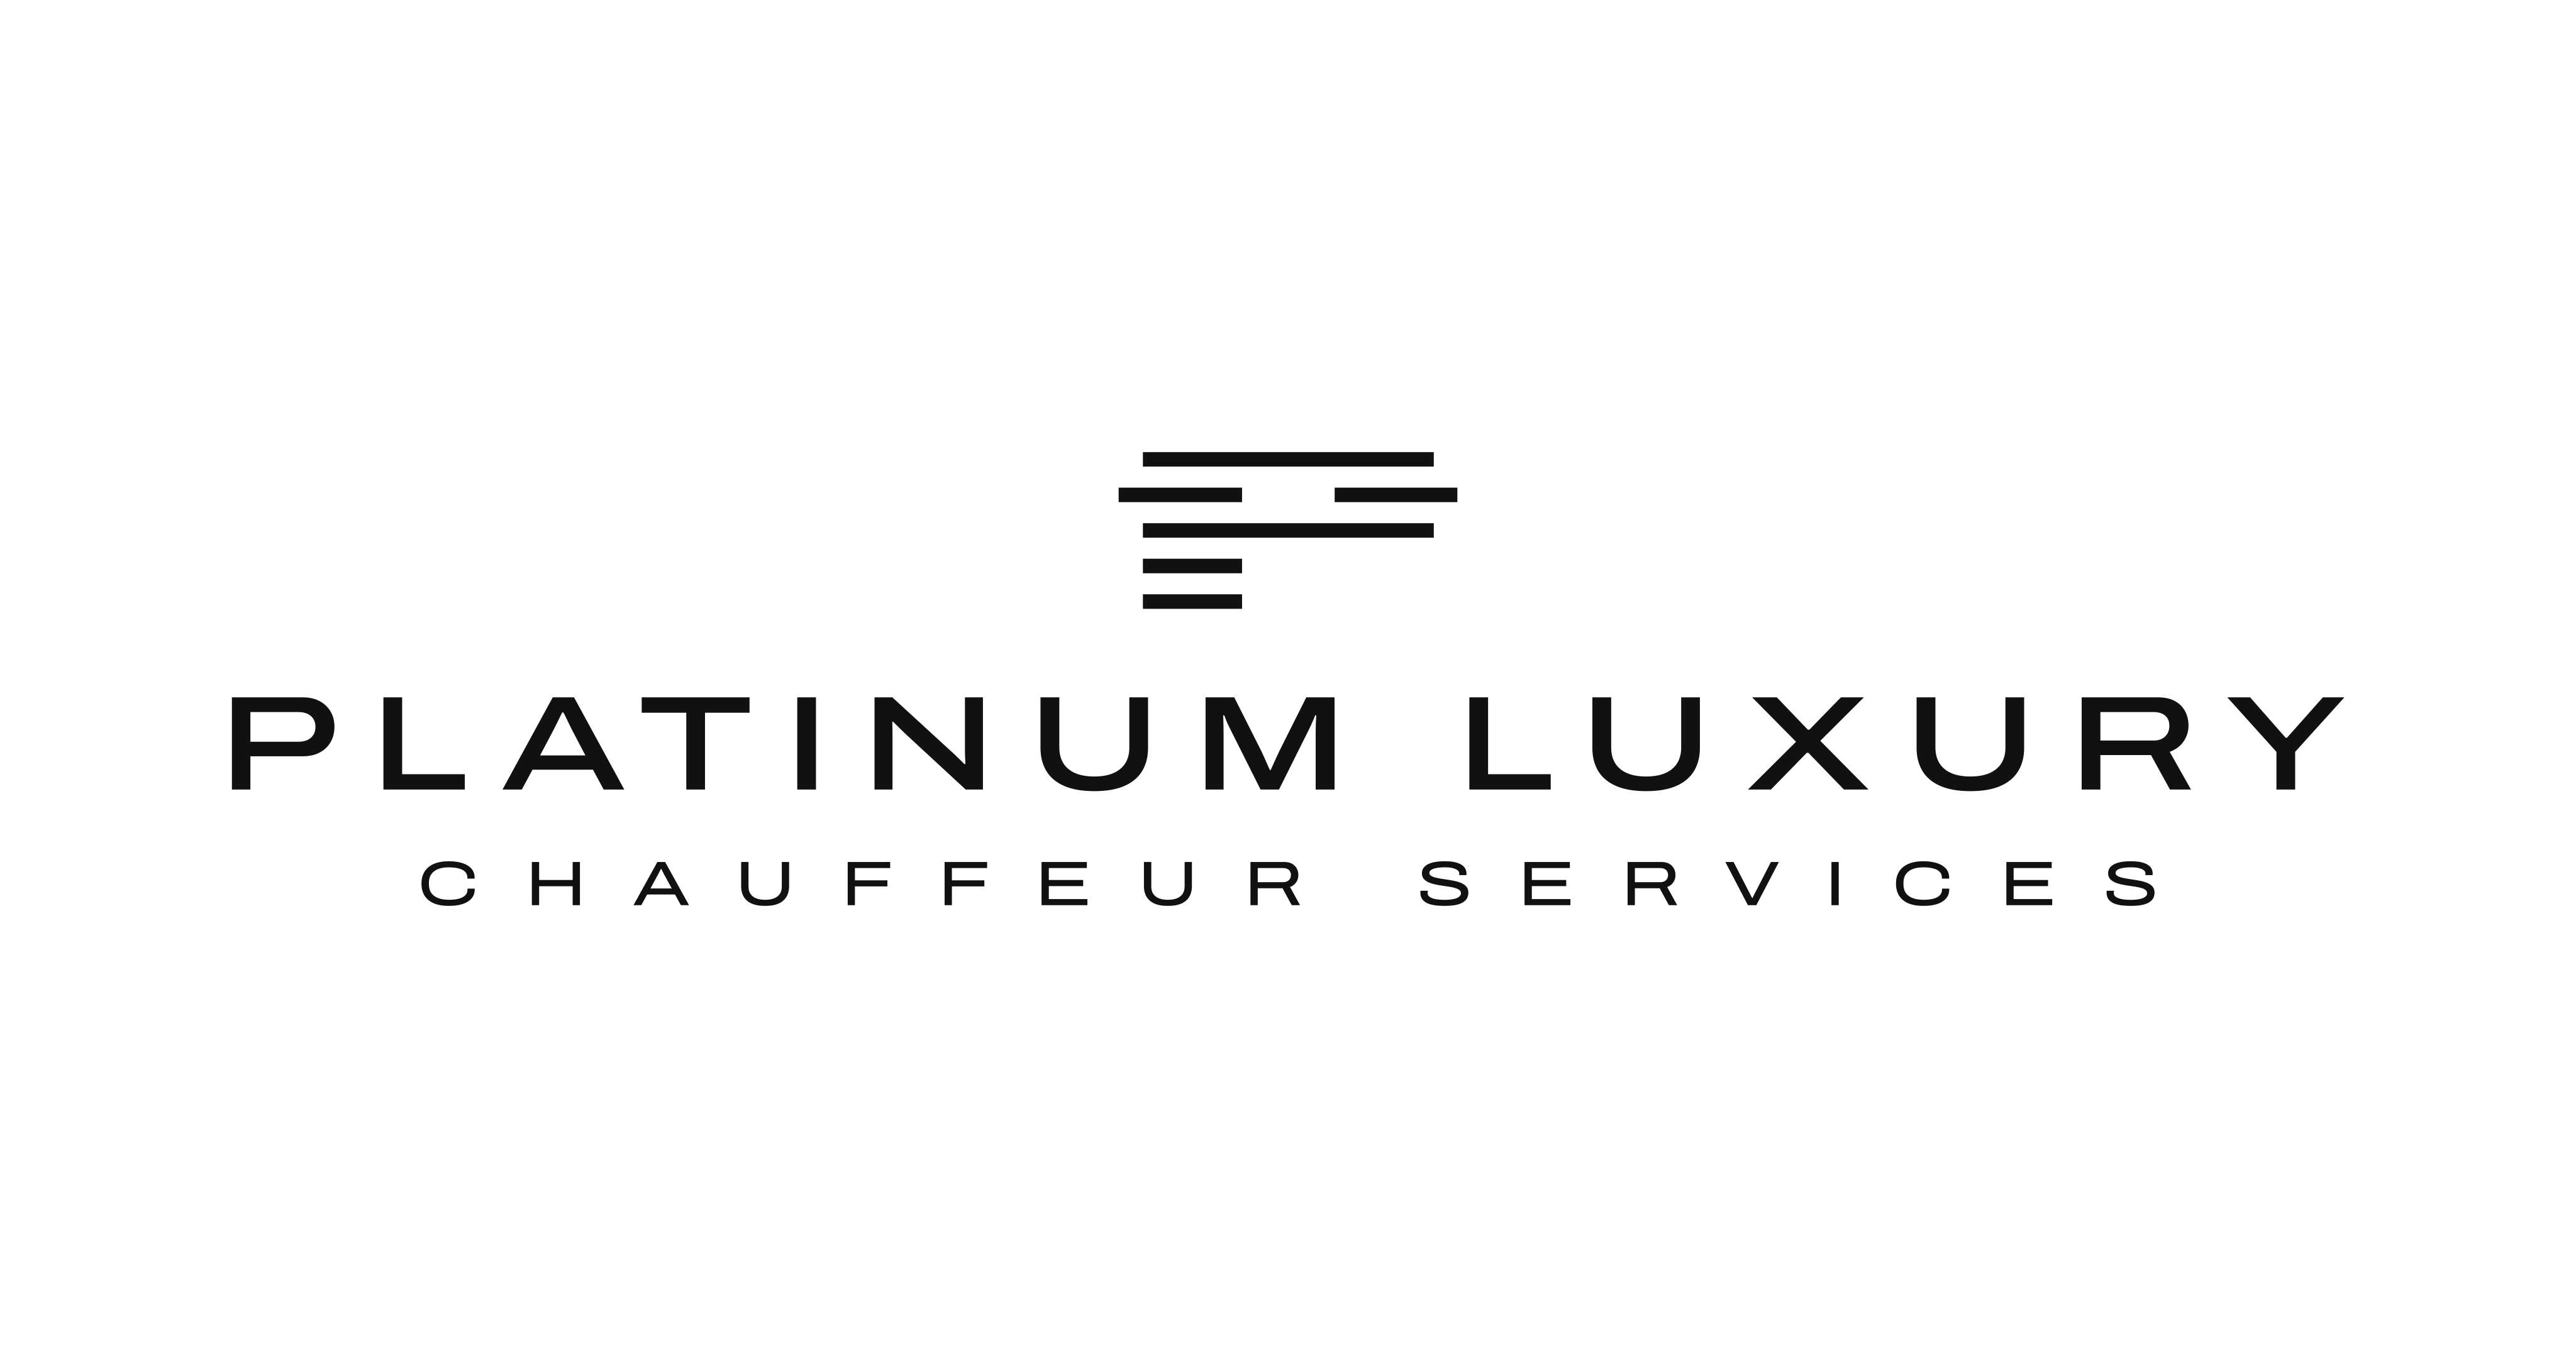 Platinum Luxury Chauffeur Services.png (83 KB)